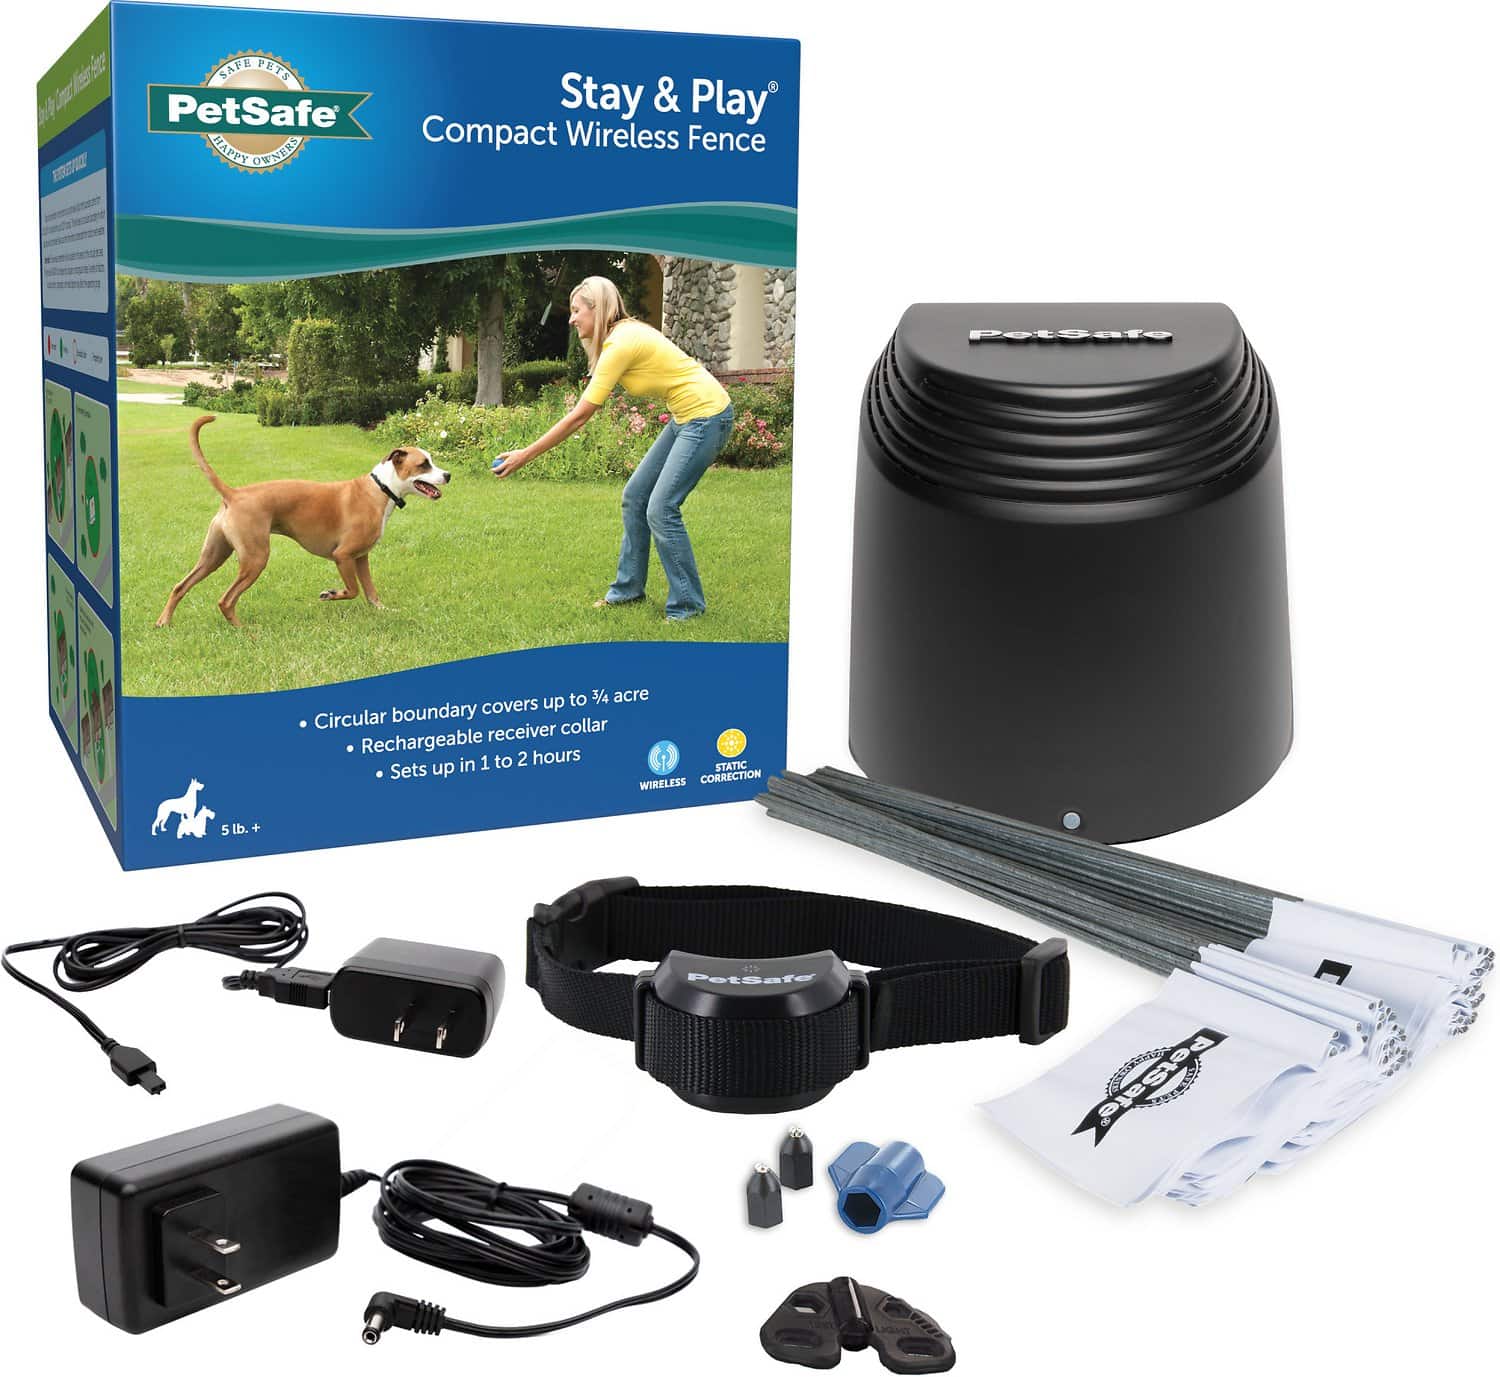 PetSafe Stay & Play Compact Wireless Fence (1)